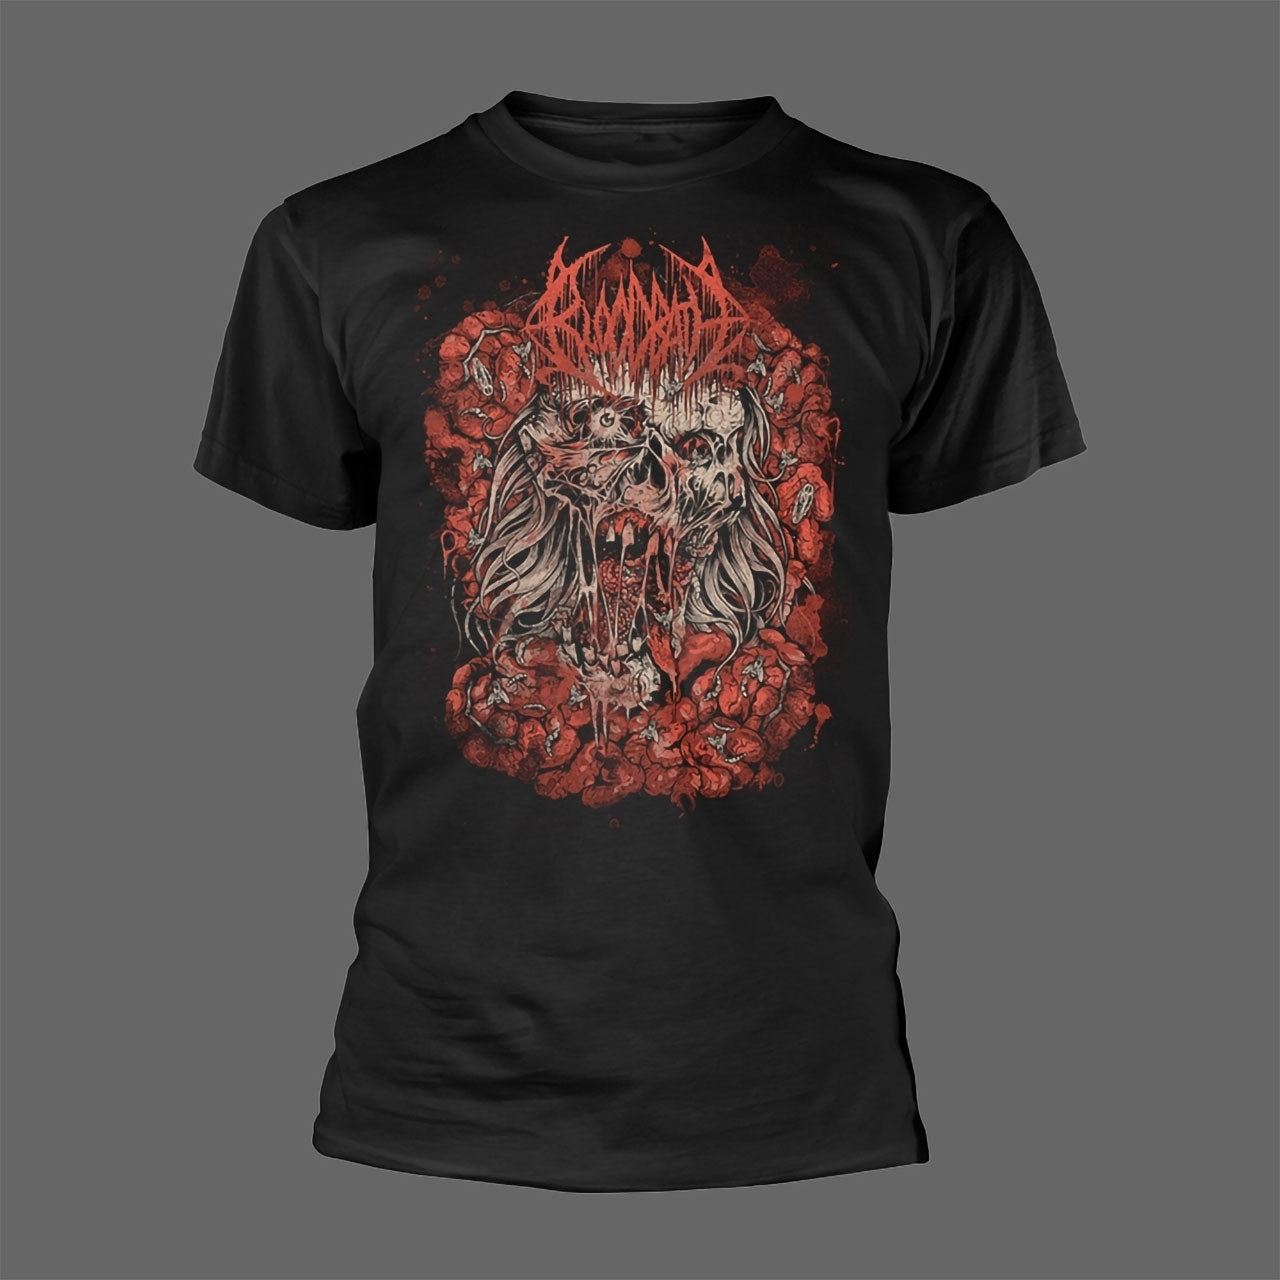 Bloodbath - Wretched Human Mirror (T-Shirt)